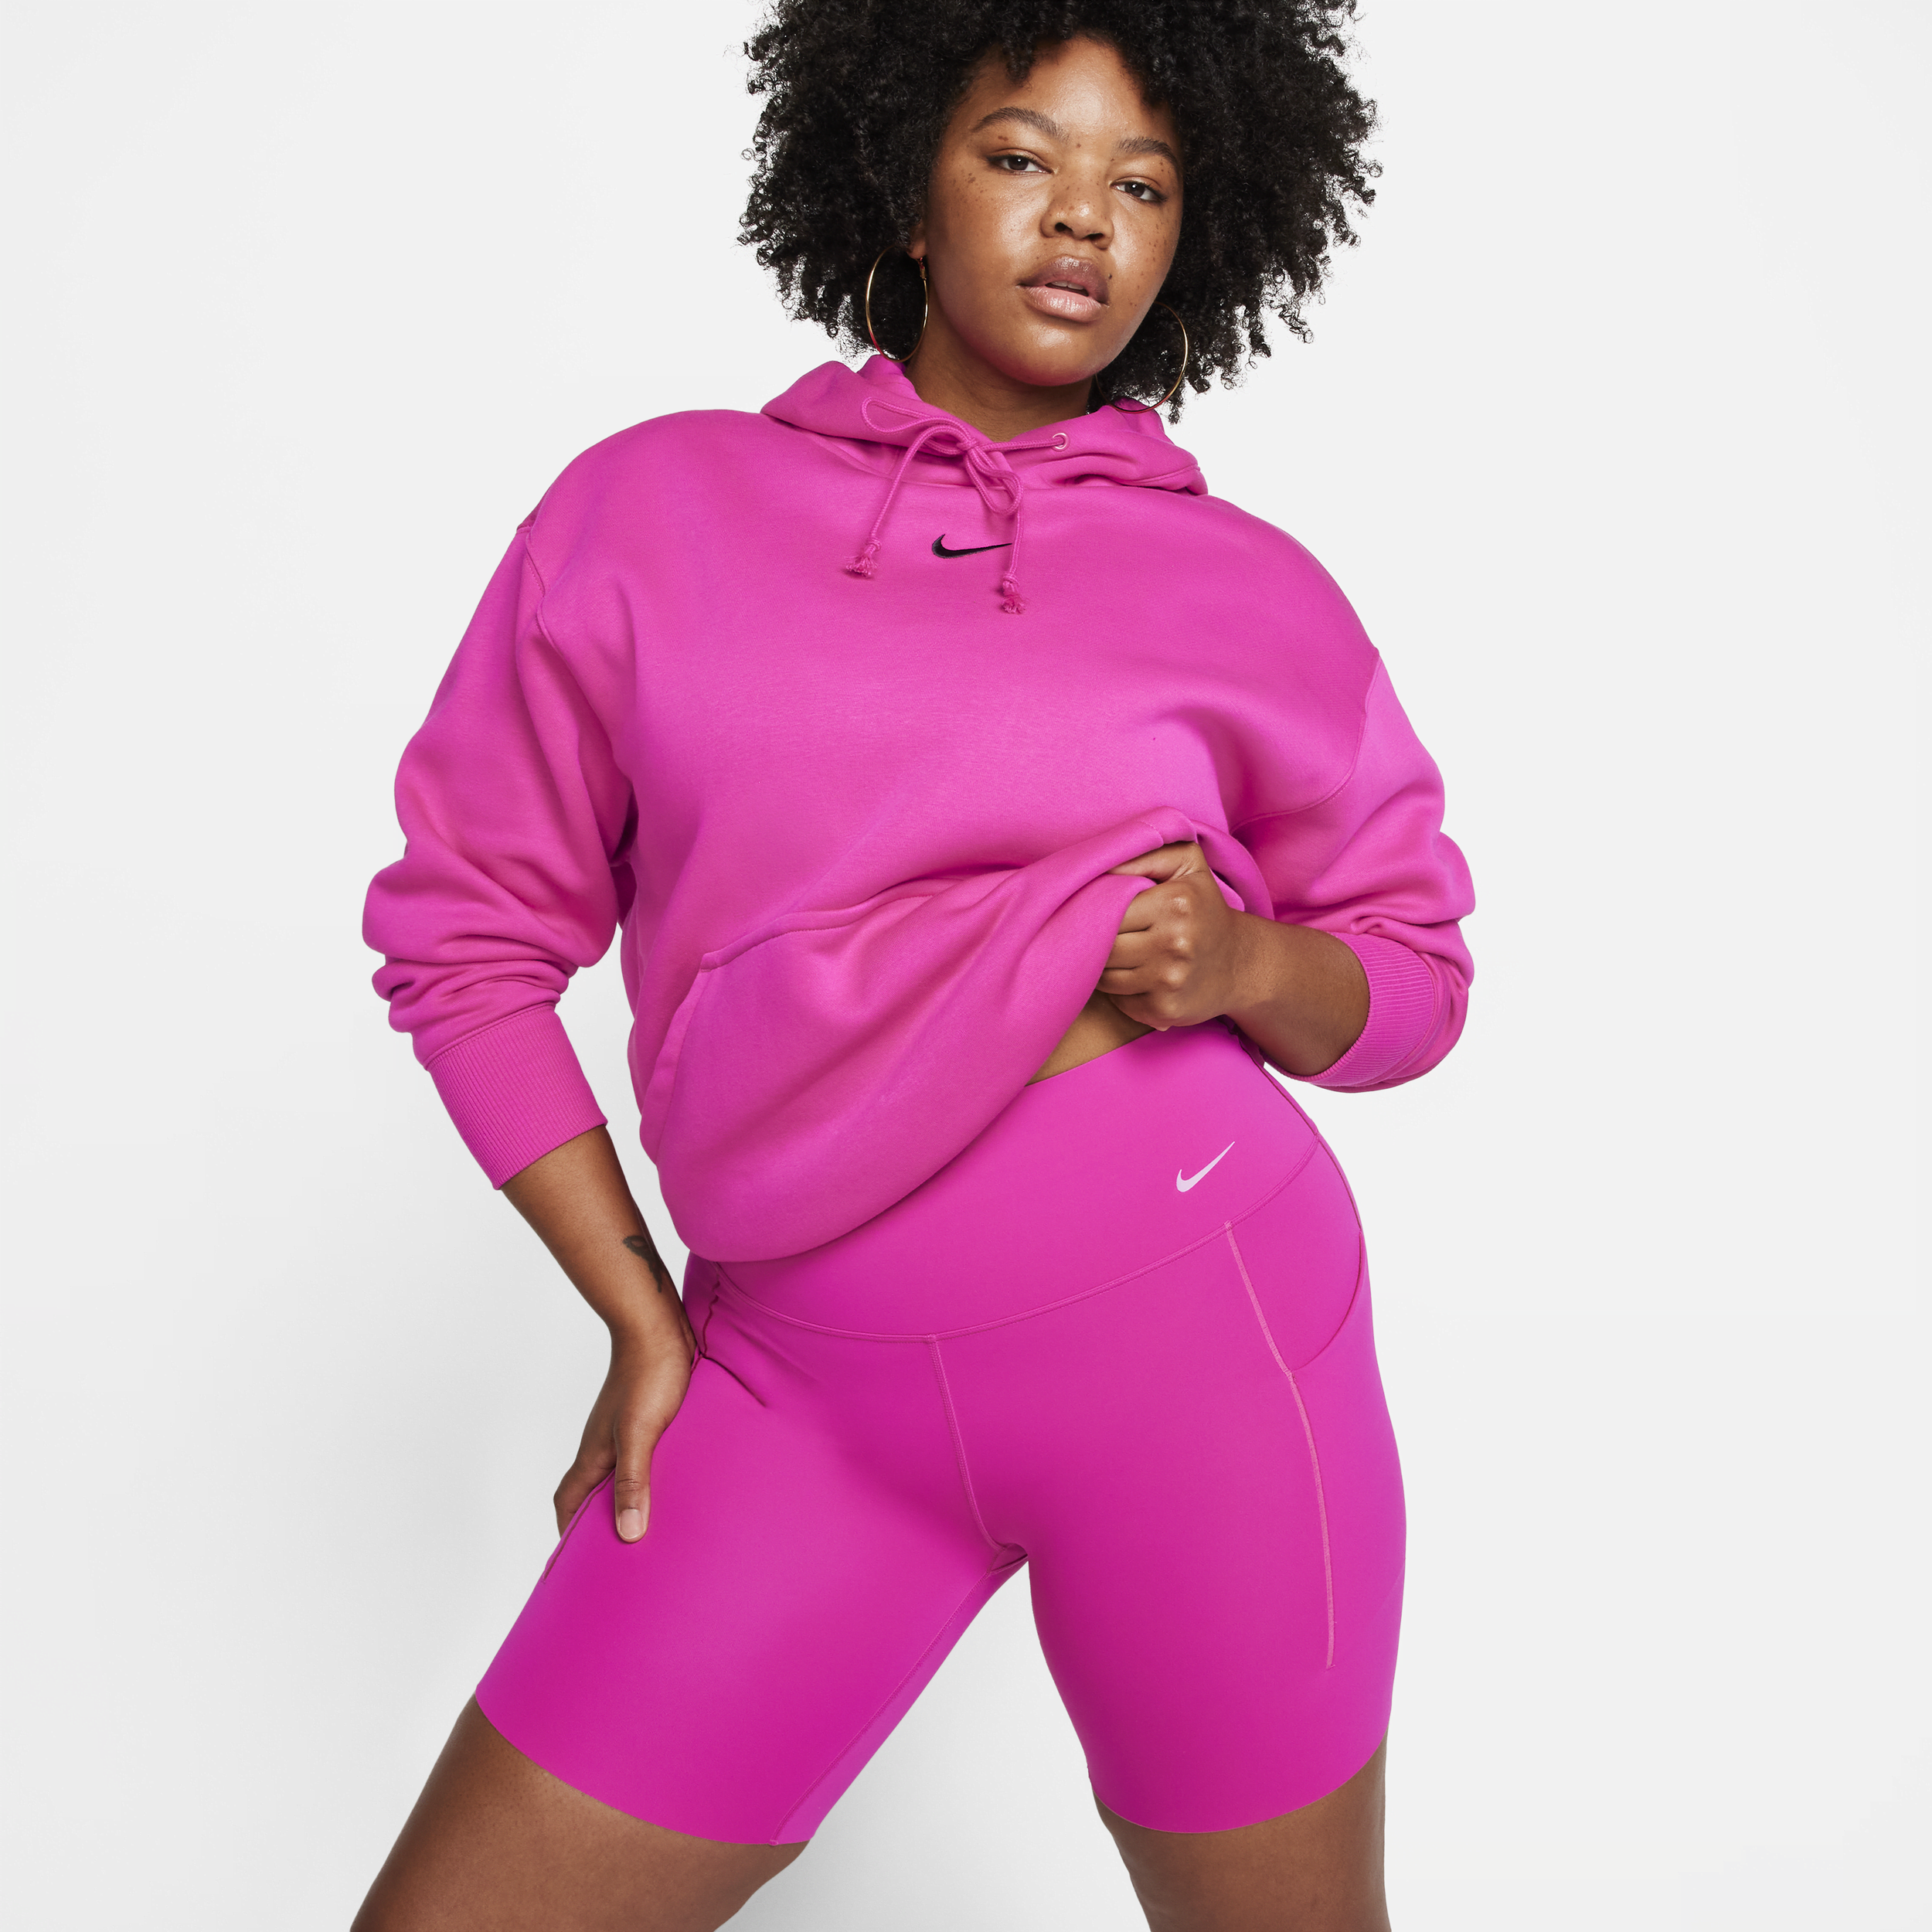 Nike Universa-cykelshorts (20 cm) med medium støtte, høj talje og lommer til kvinder - Pink